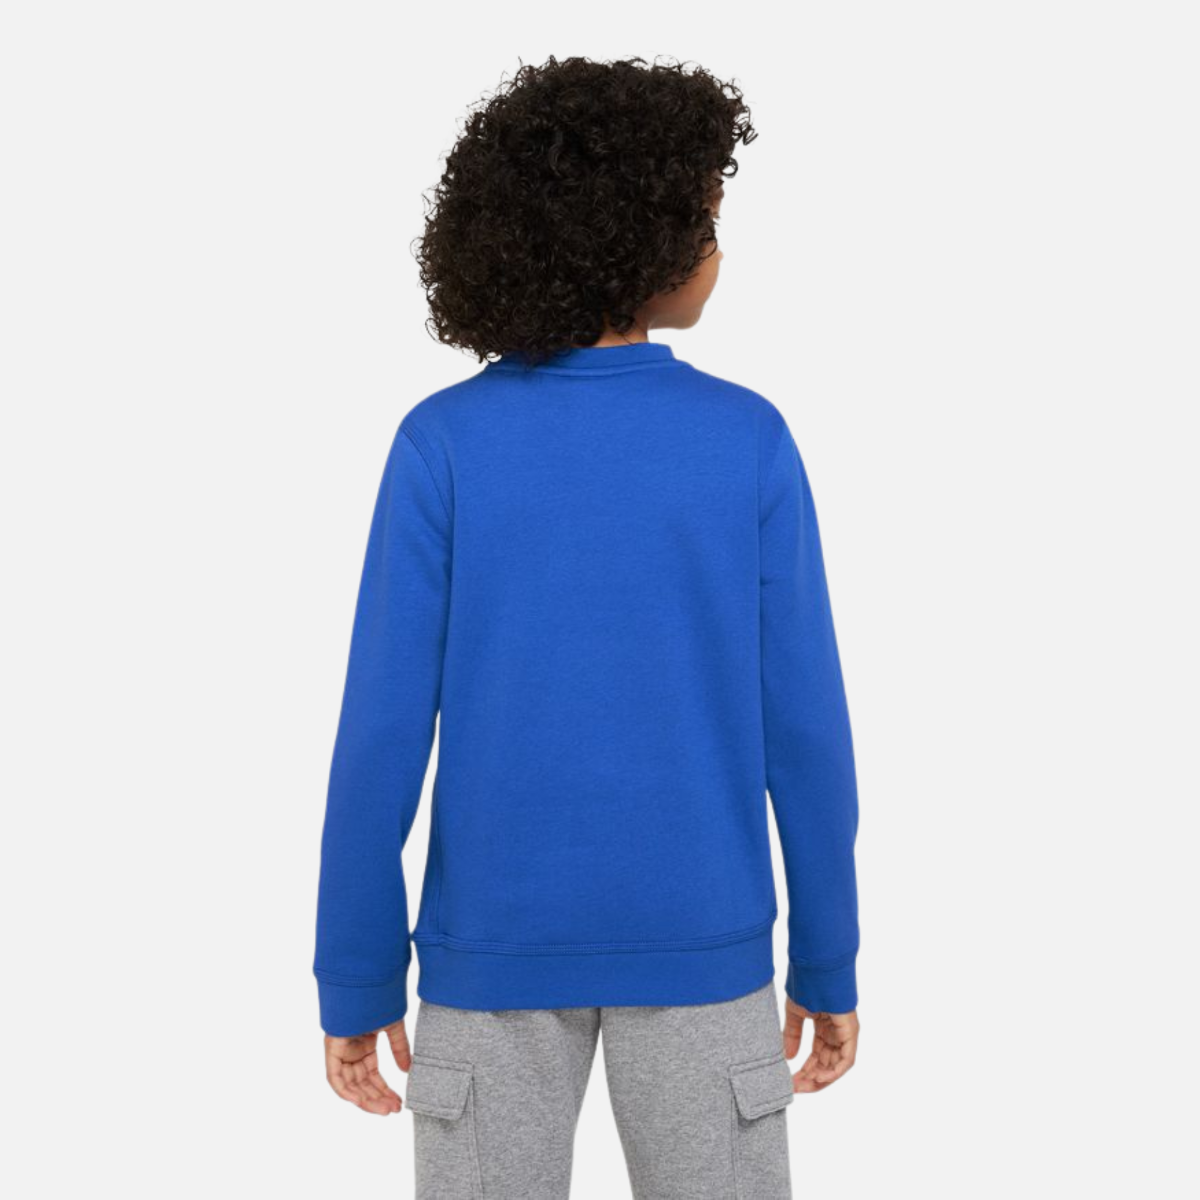 Sudadera Nike Tech Fleece Junior - Azul/Blanco/Rojo